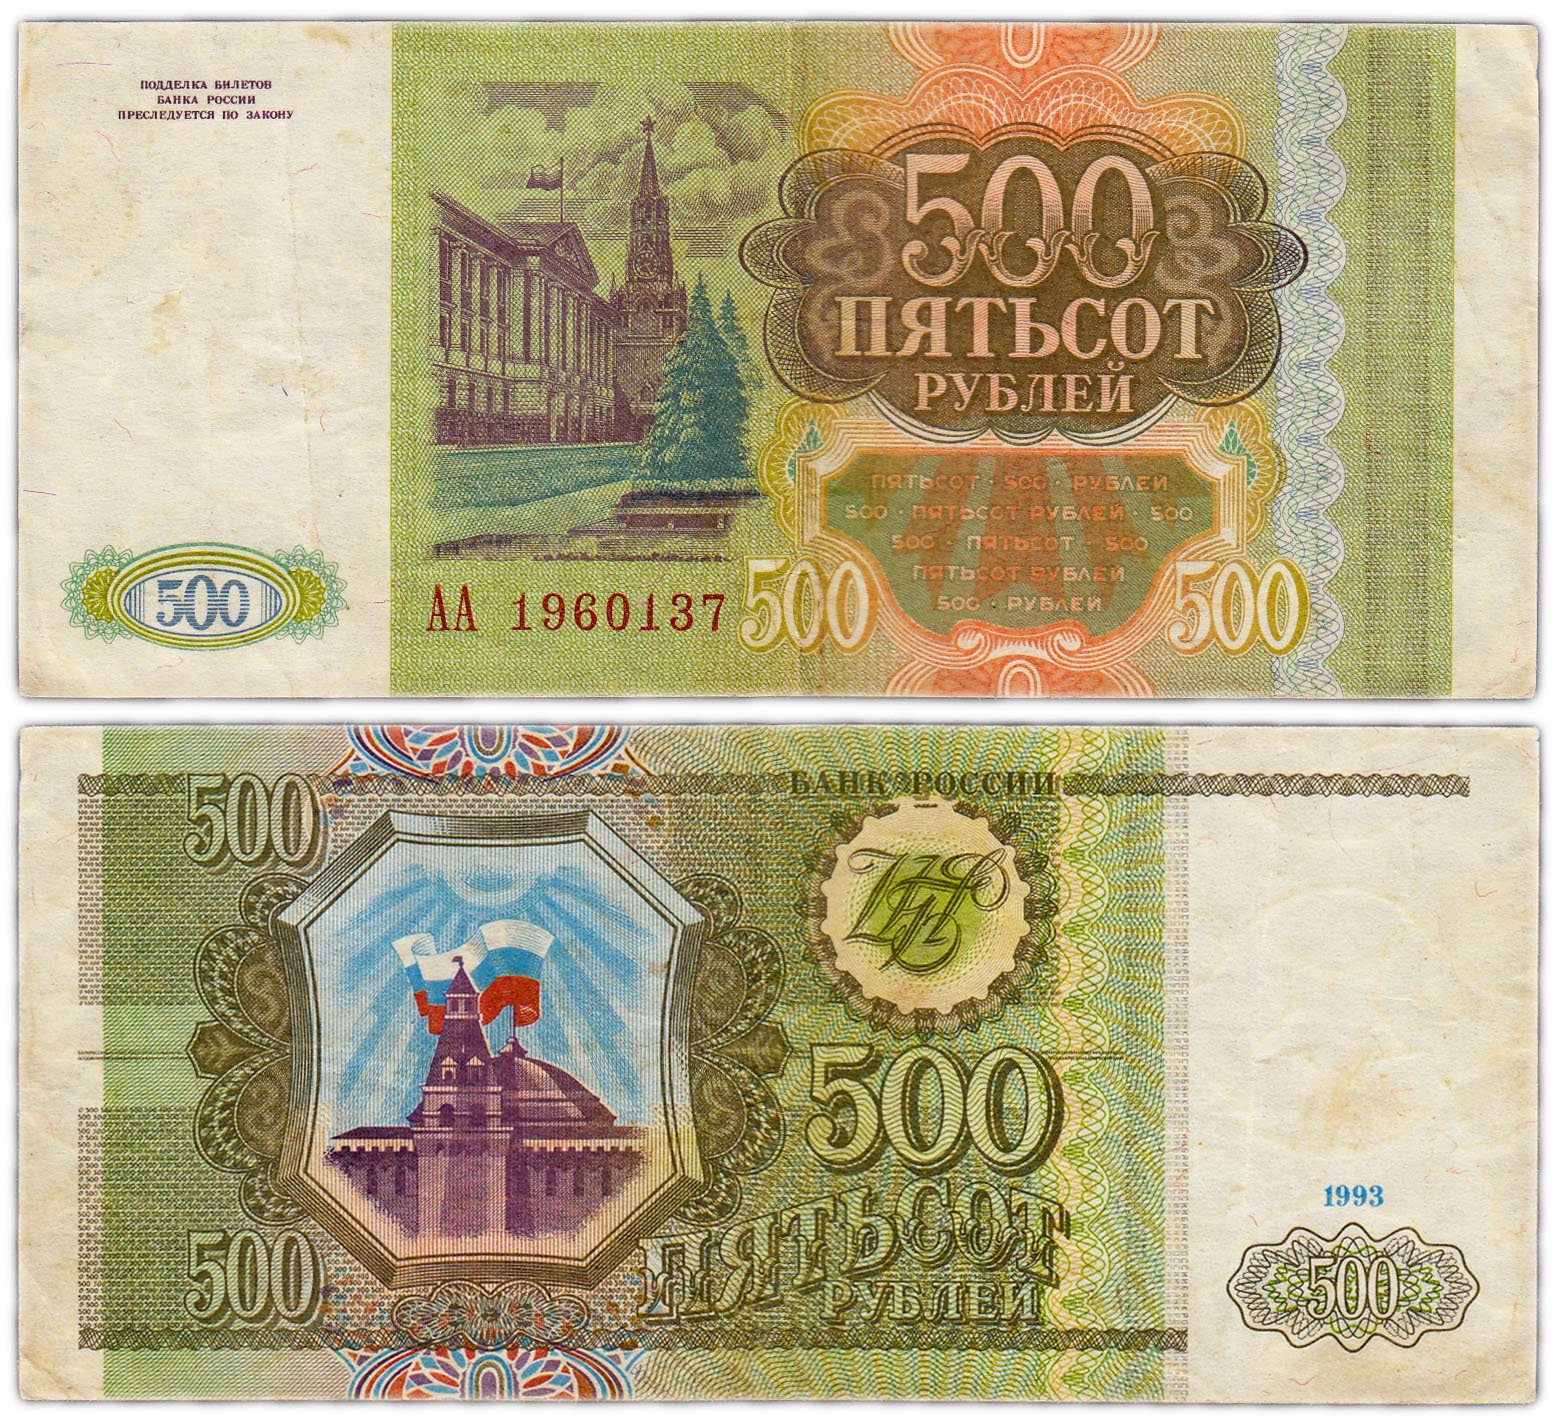 Цена купюр 1993. 500 Рублей 1993. Купюра 500 рублей 1993 года. Банкнота 500 рублей 1993. Купюра 500 рублей 1993.